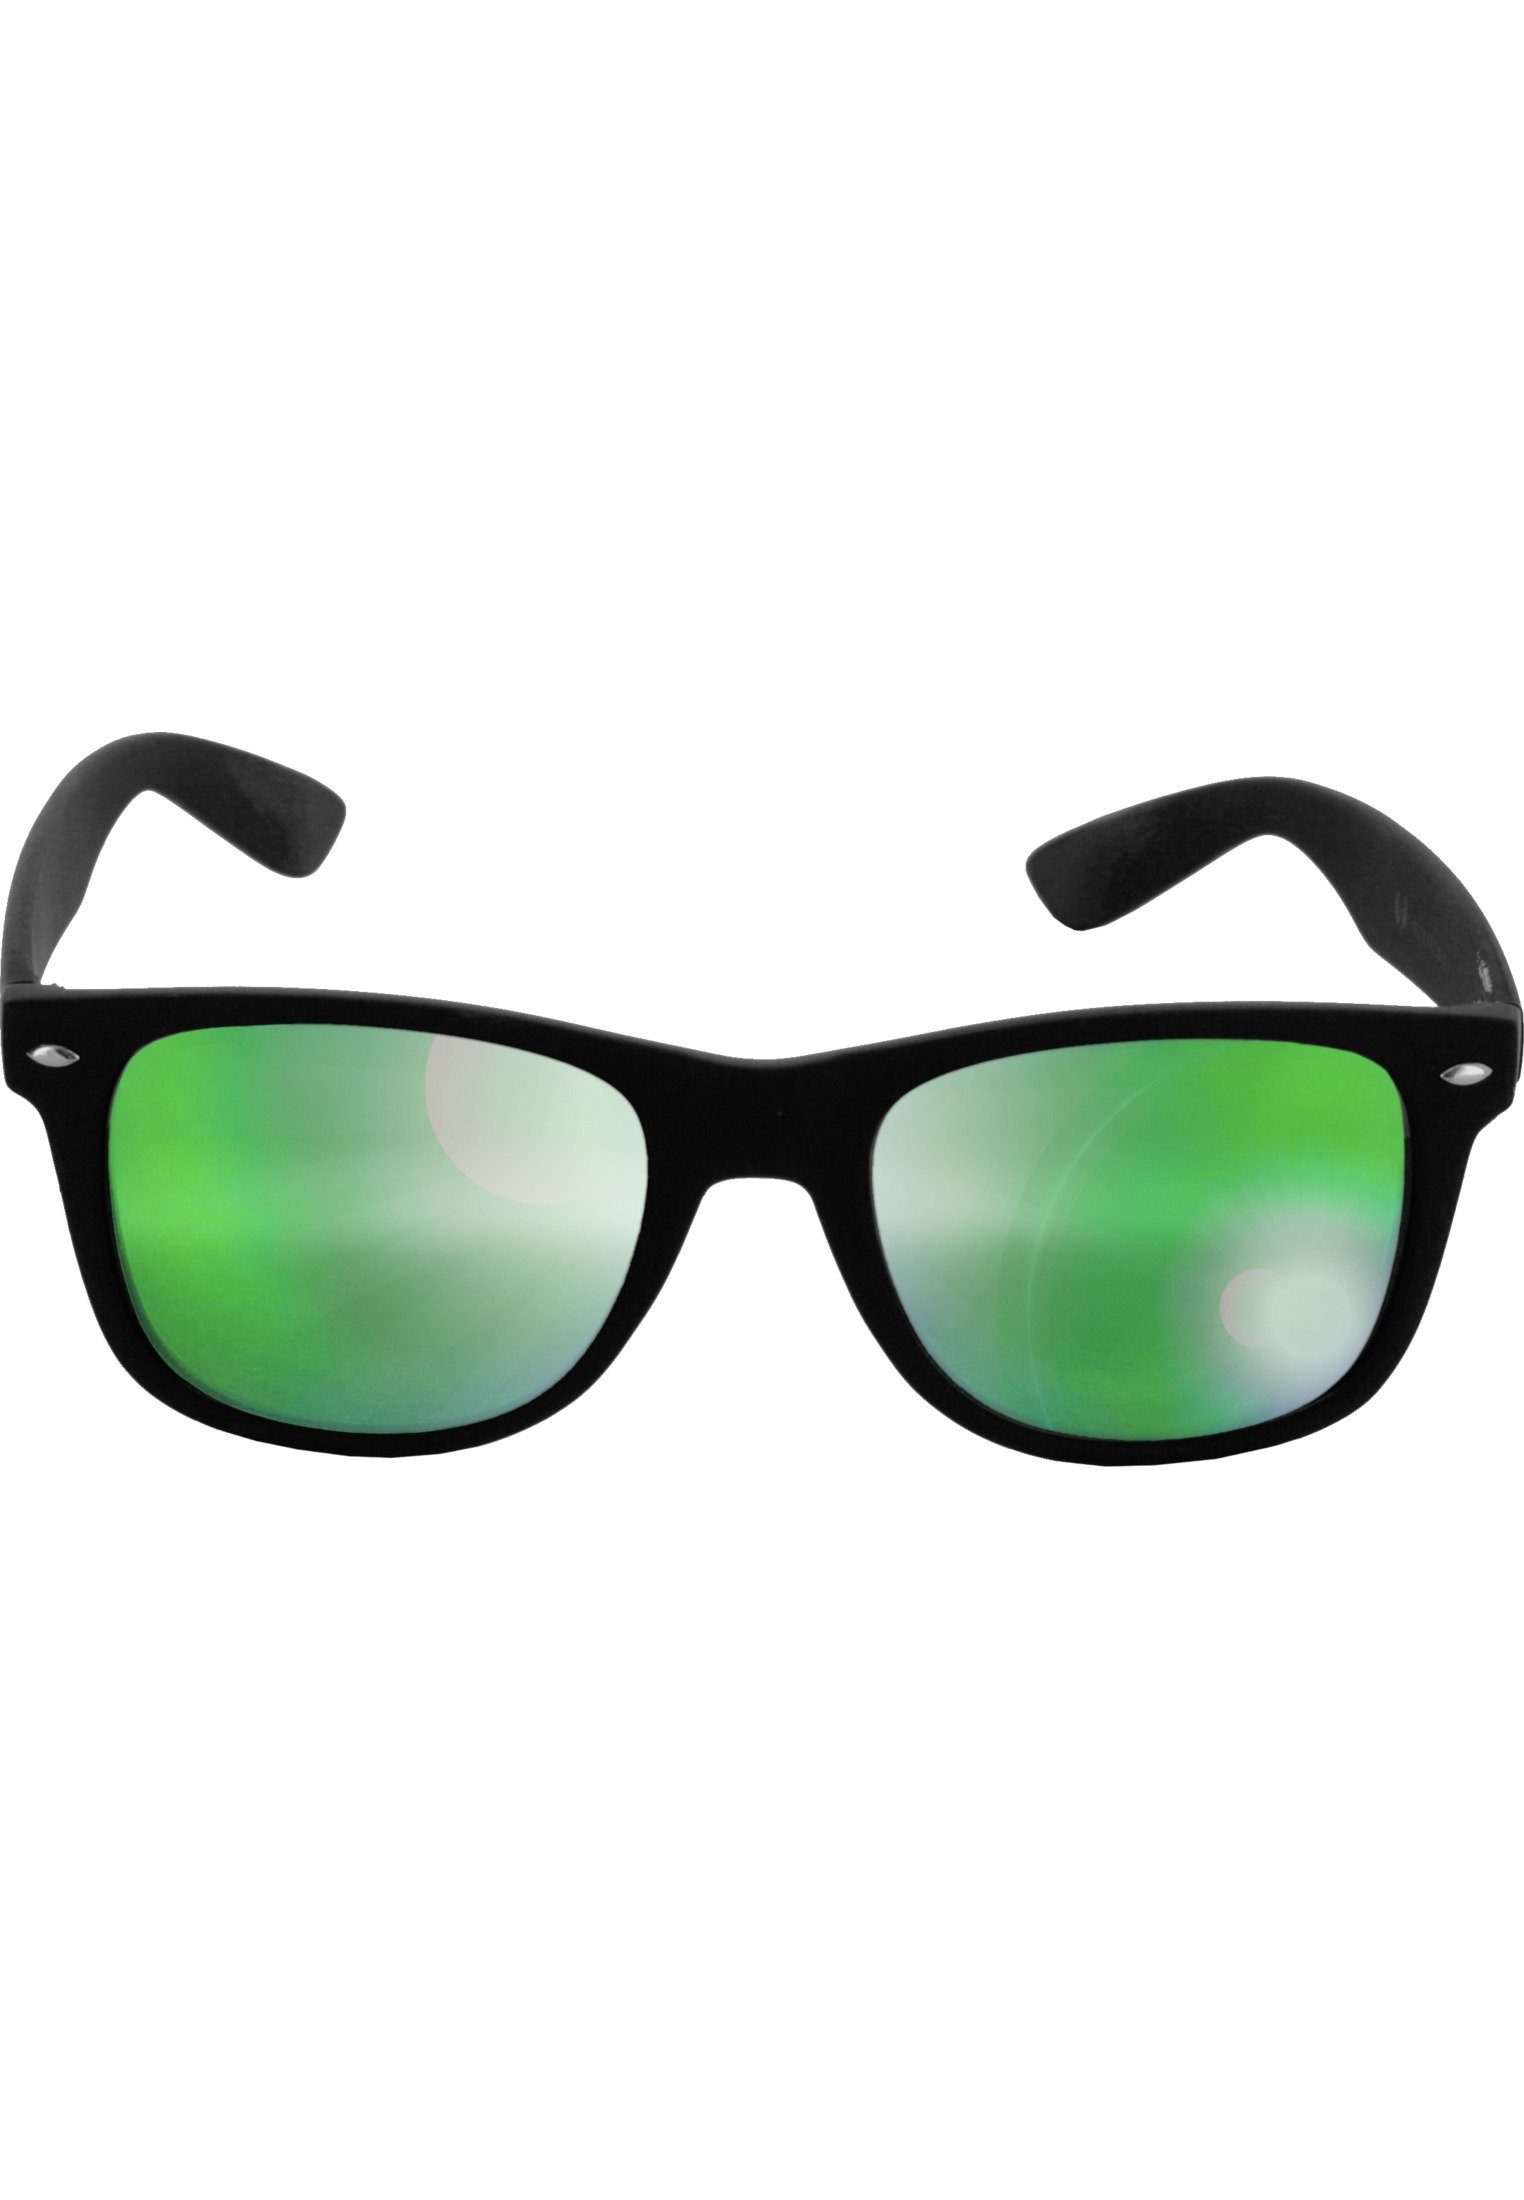 MSTRDS Sonnenbrille Accessoires Sunglasses Likoma Mirror blk/grn